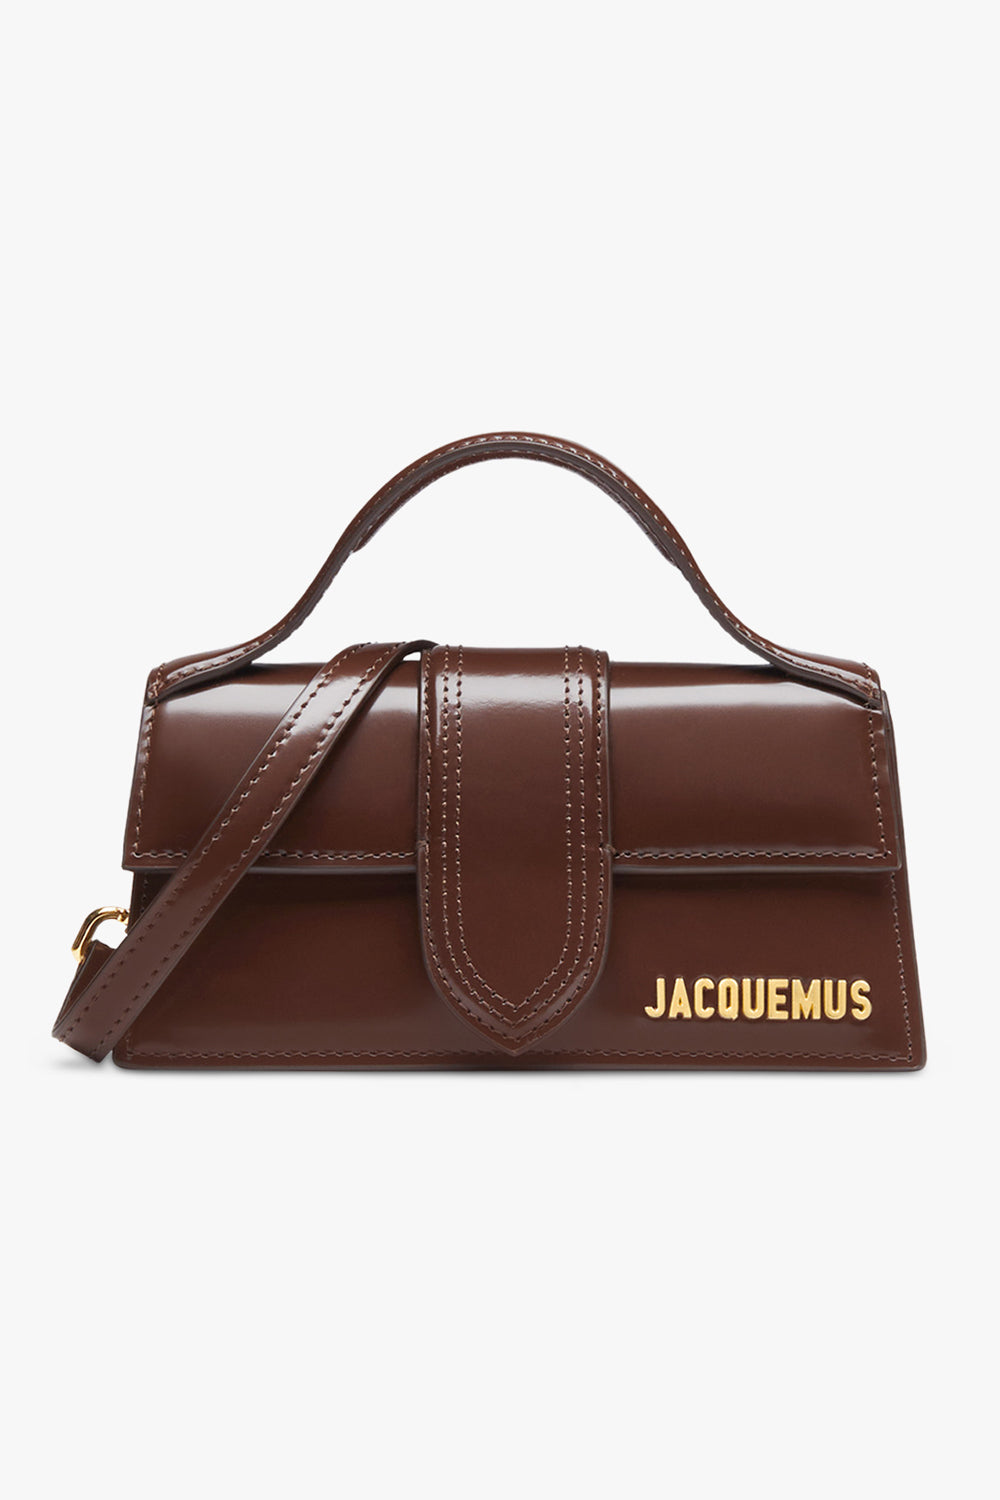 JACQUEMUS Bags BROWN / MIDNIGHT BROWN LE BAMBINO BAG | SHINY BROWN